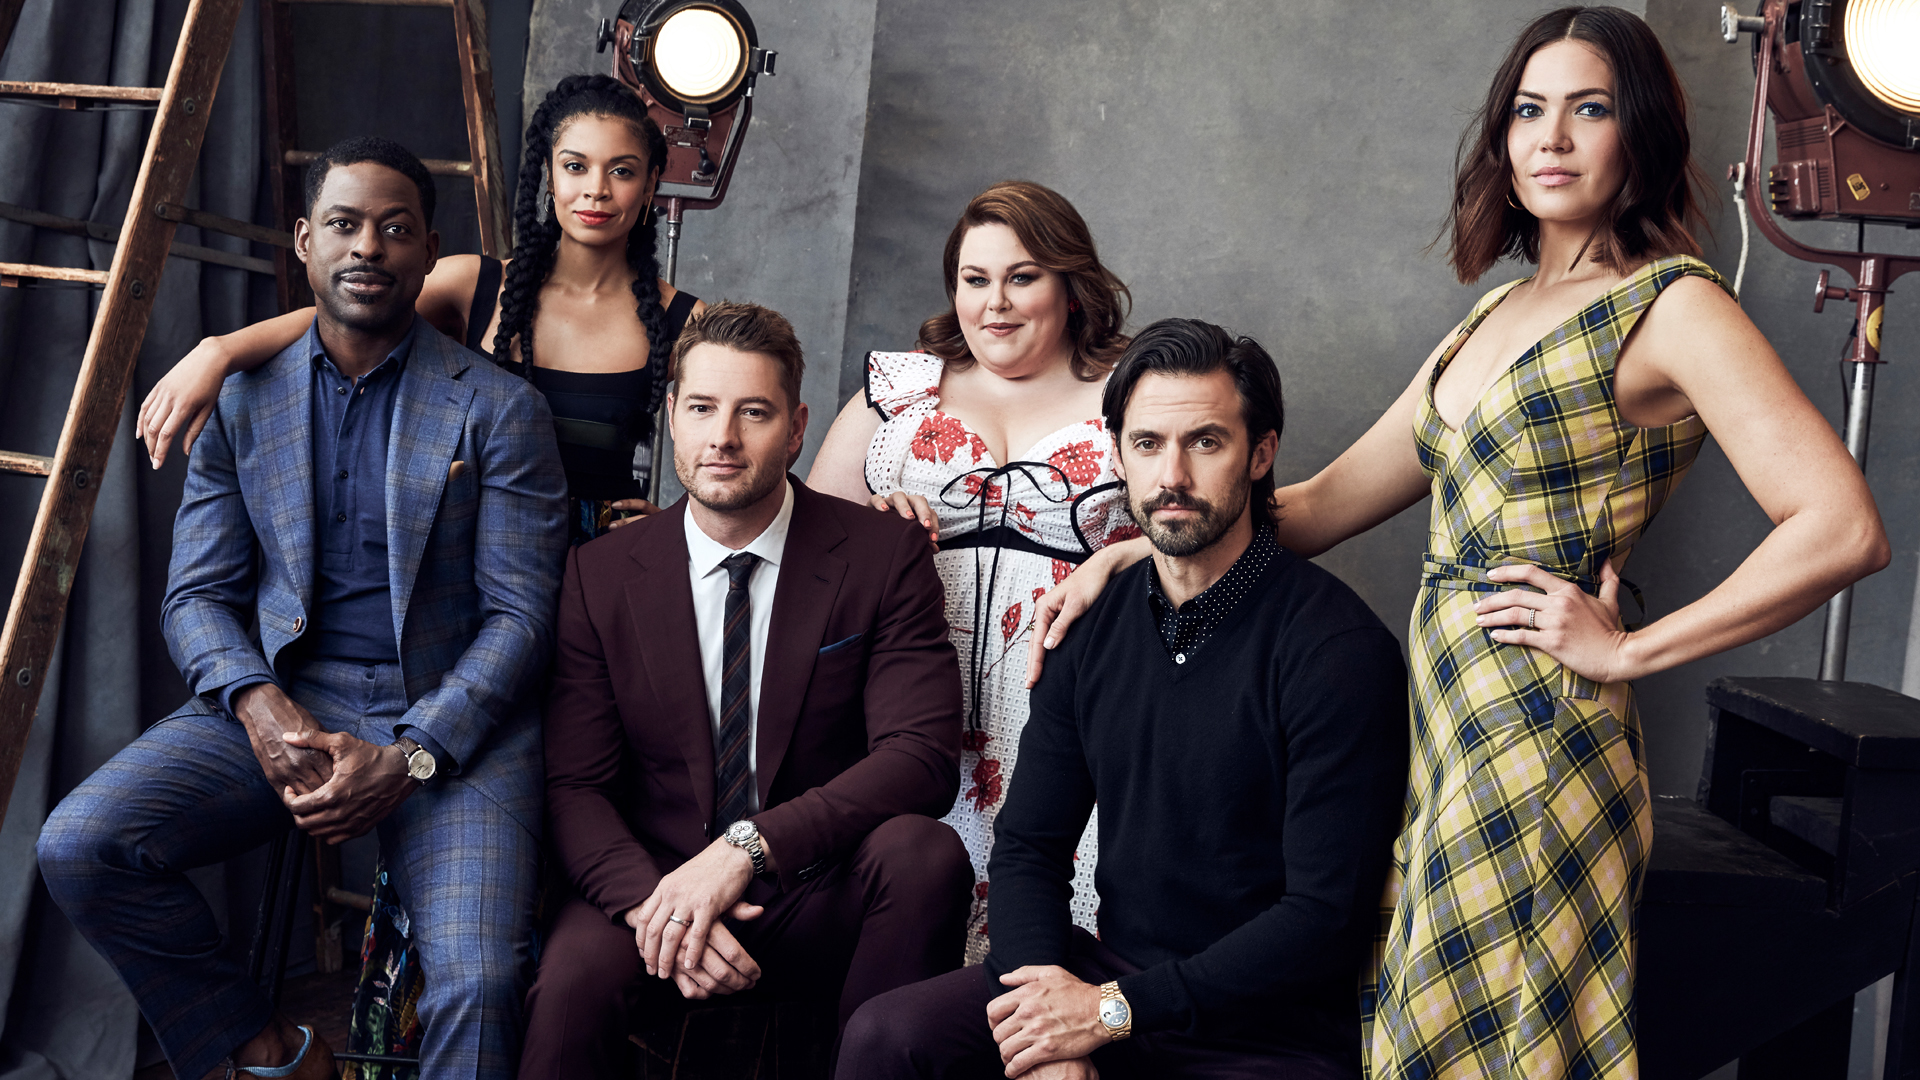 'This Is Us' cast members Sterling K. Brown, Susan Kelechi Watson, Justin Hartley, Chrissy Metz, Milo Ventimiglia, Mandy Moore in 2019